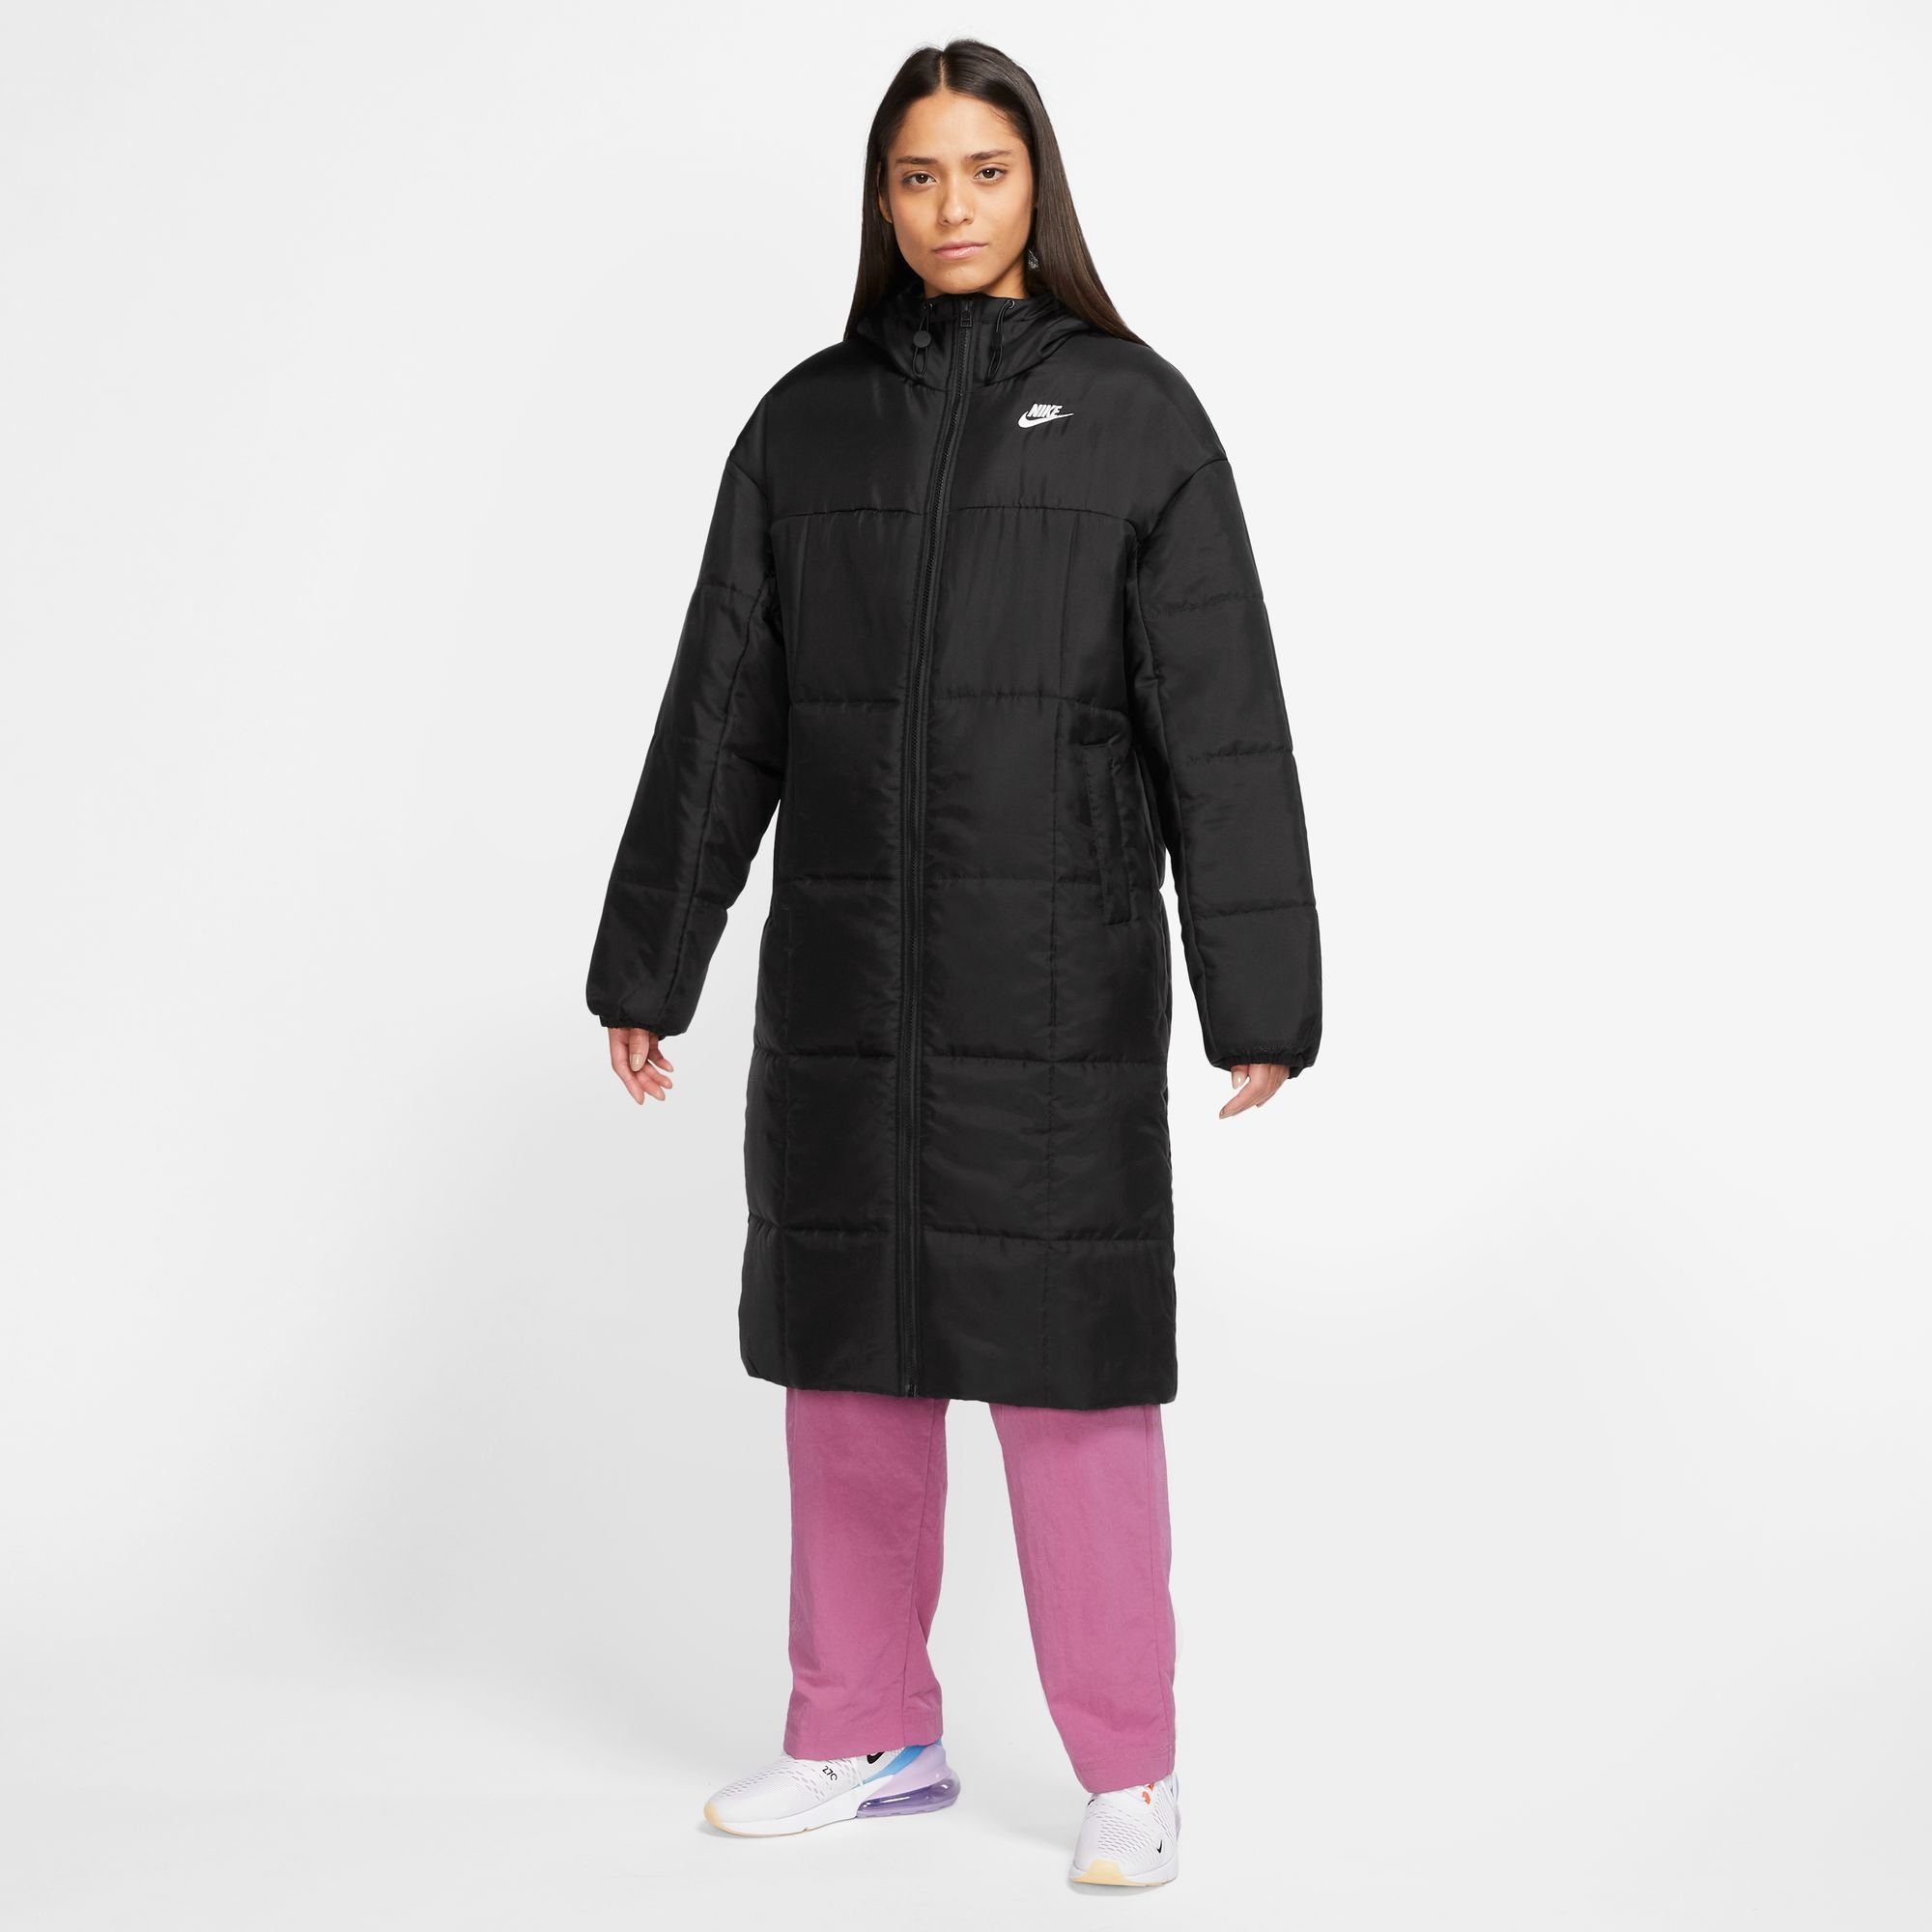 WOMEN'S CLASSIC Sportswear PARKA BLACK/WHITE Steppmantel THERMA-FIT Nike